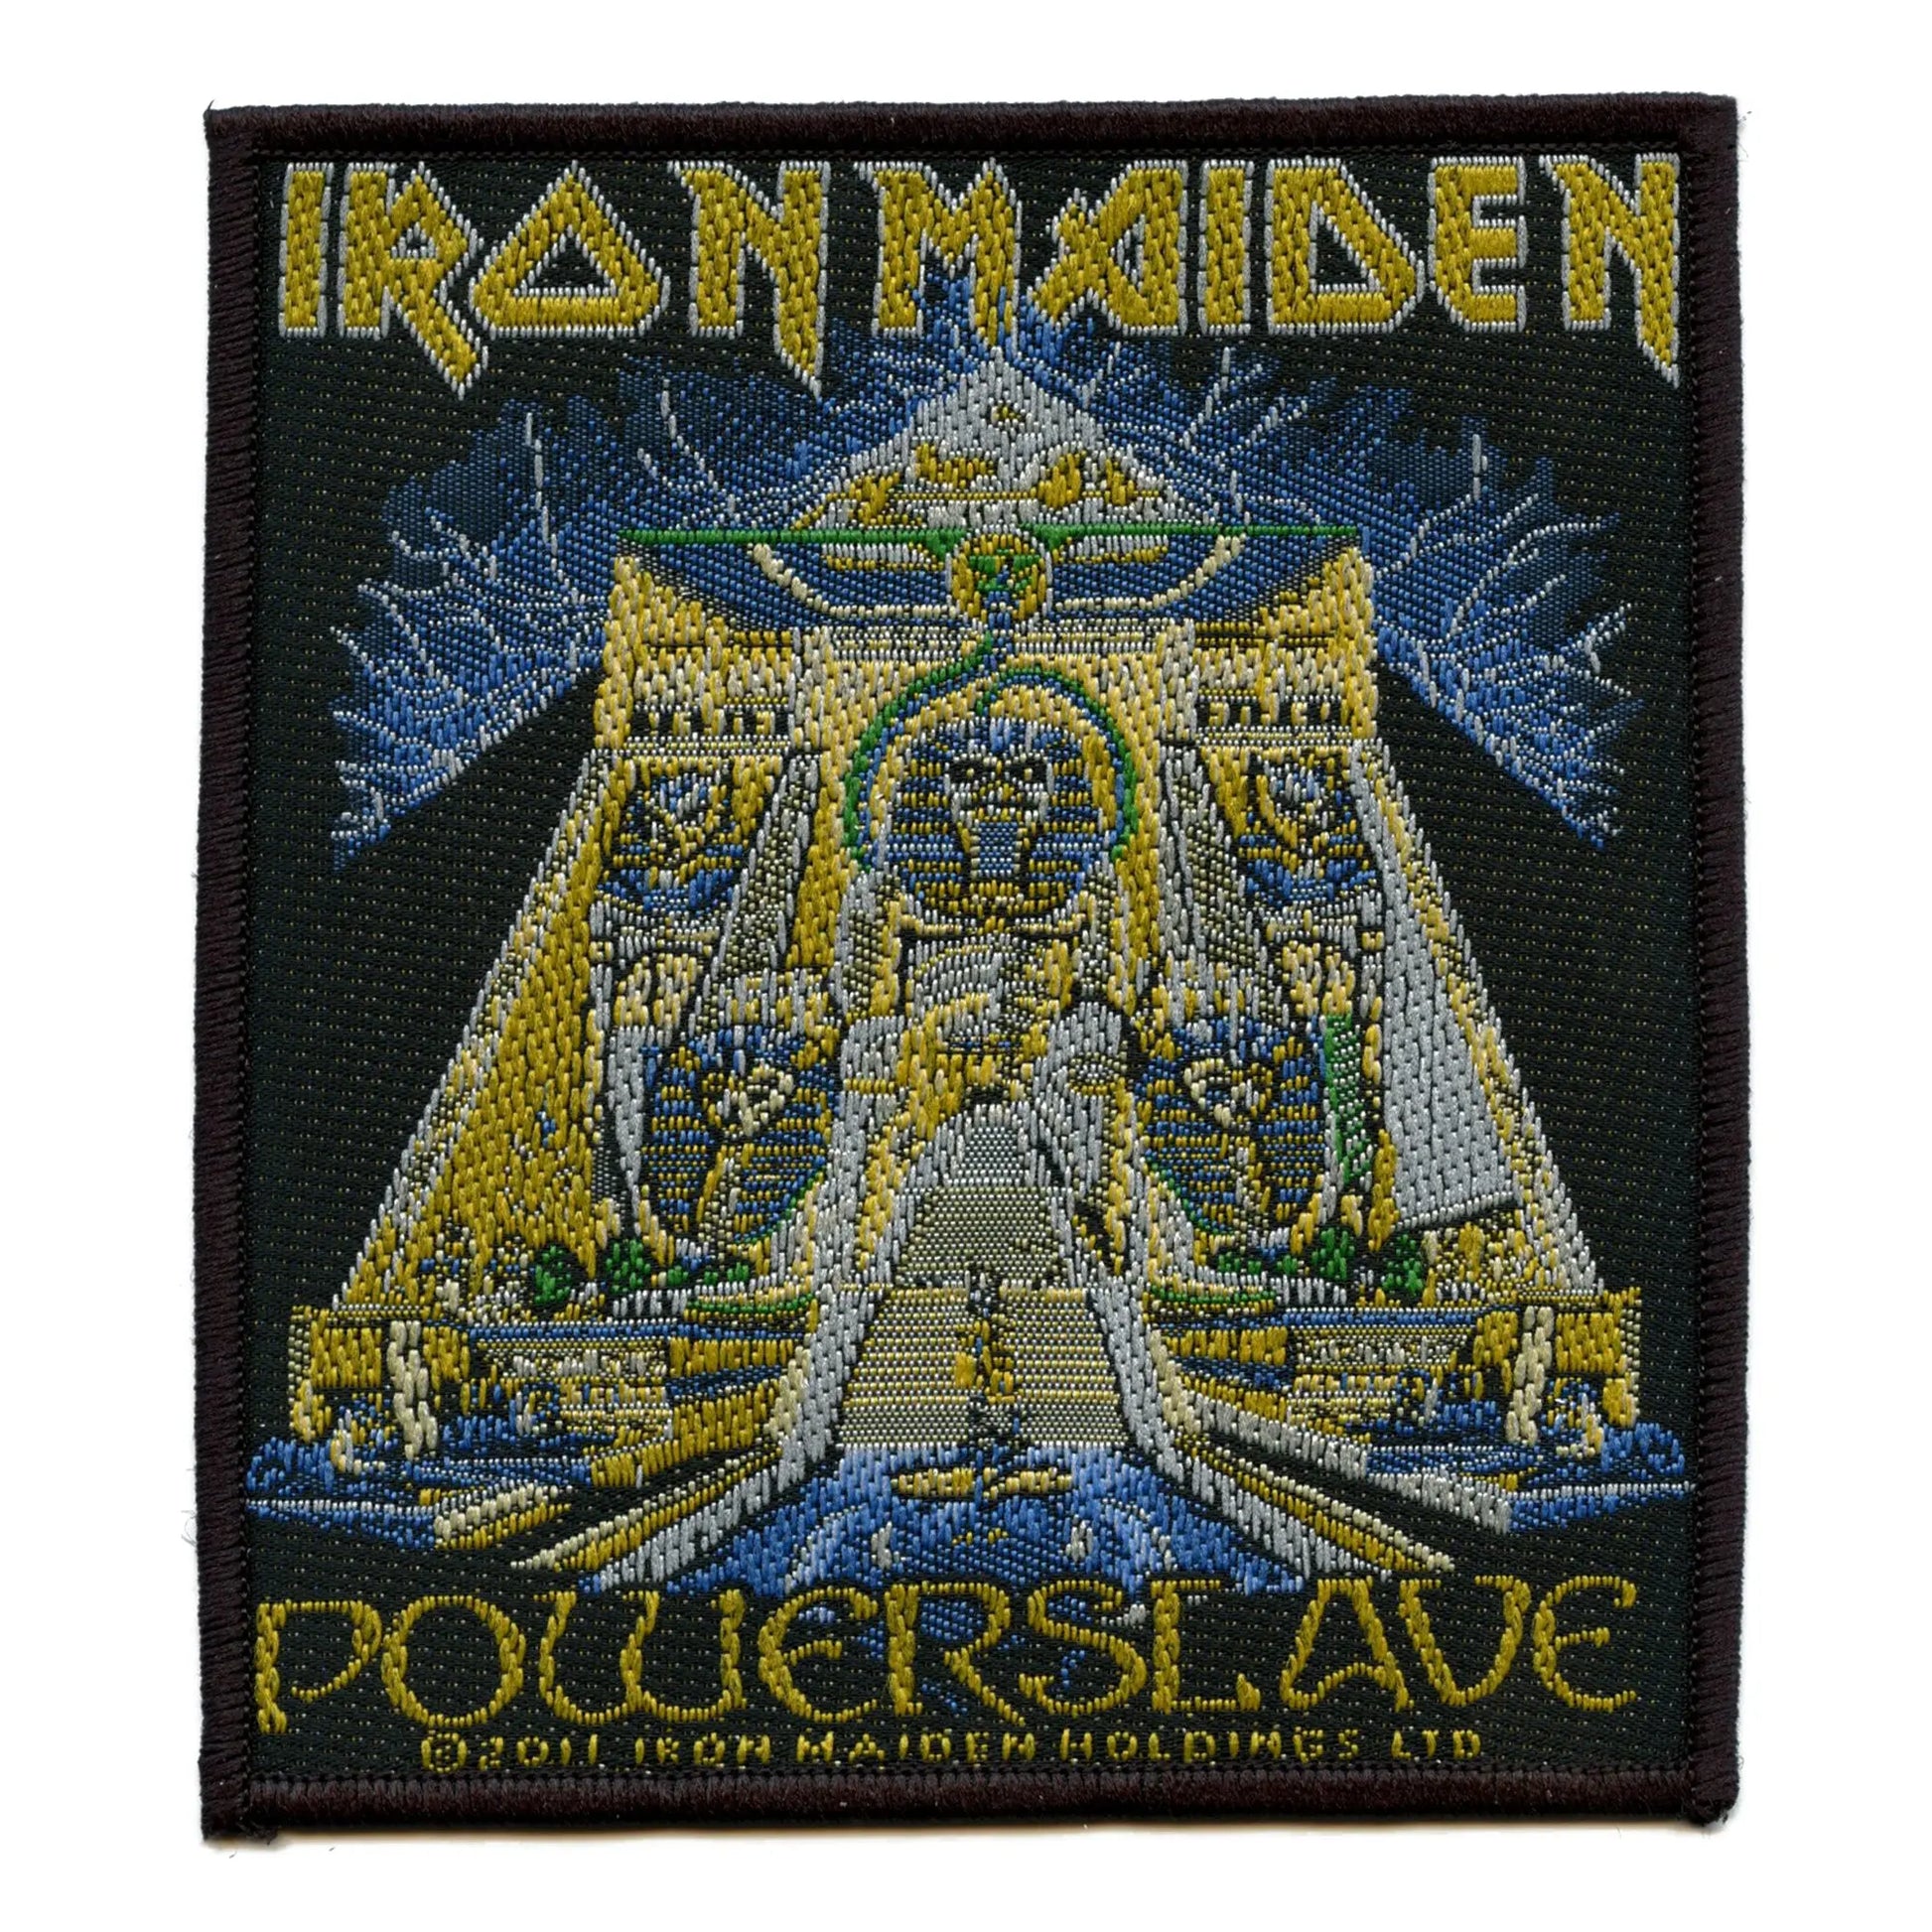 Iron Maiden Powerslave Patch 1984 Album Art Woven Sew On 